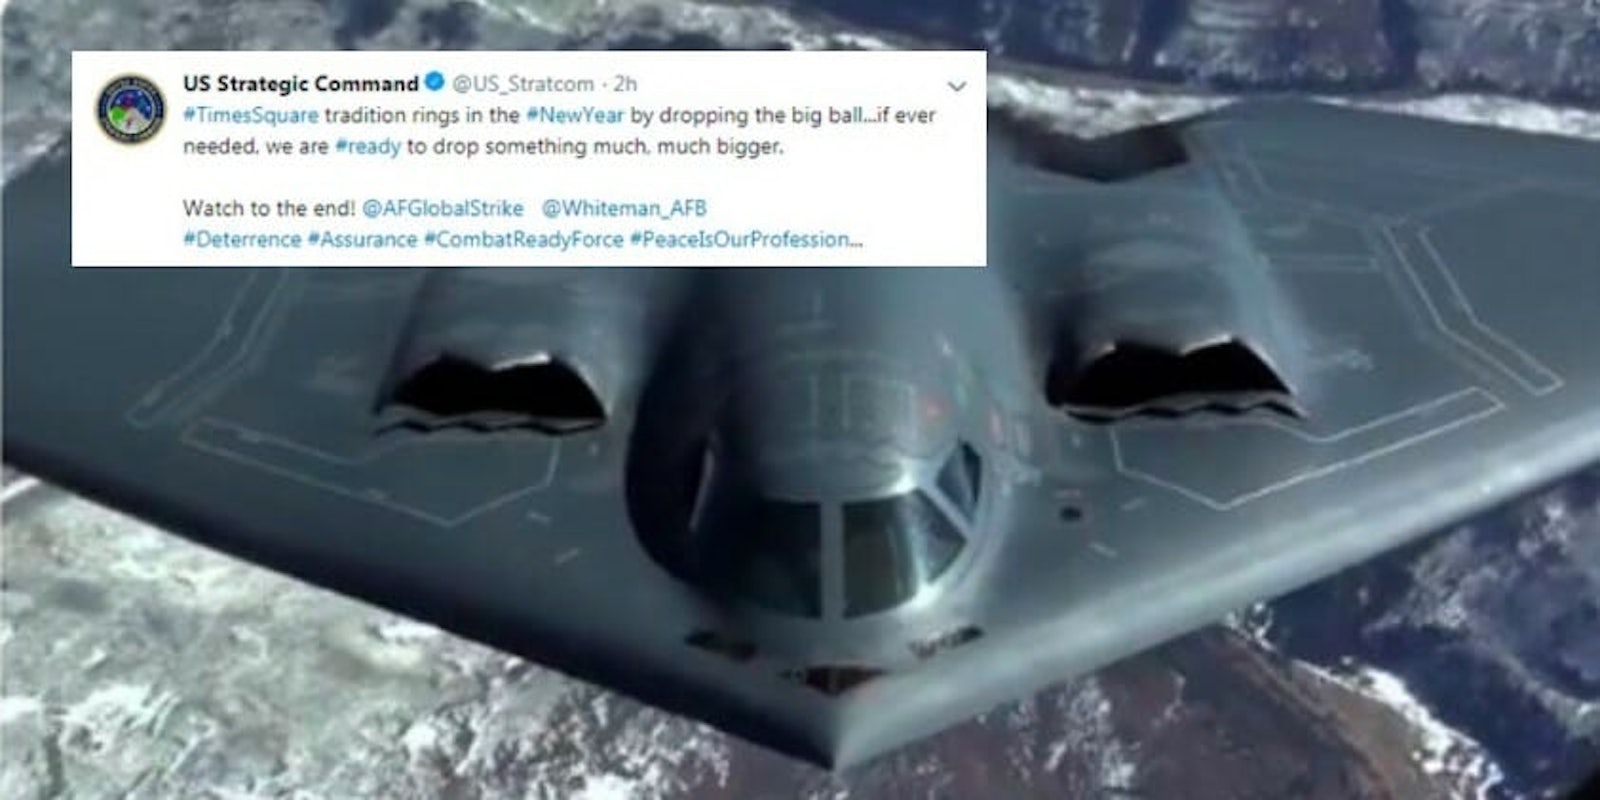 us strategic command bomb tweet